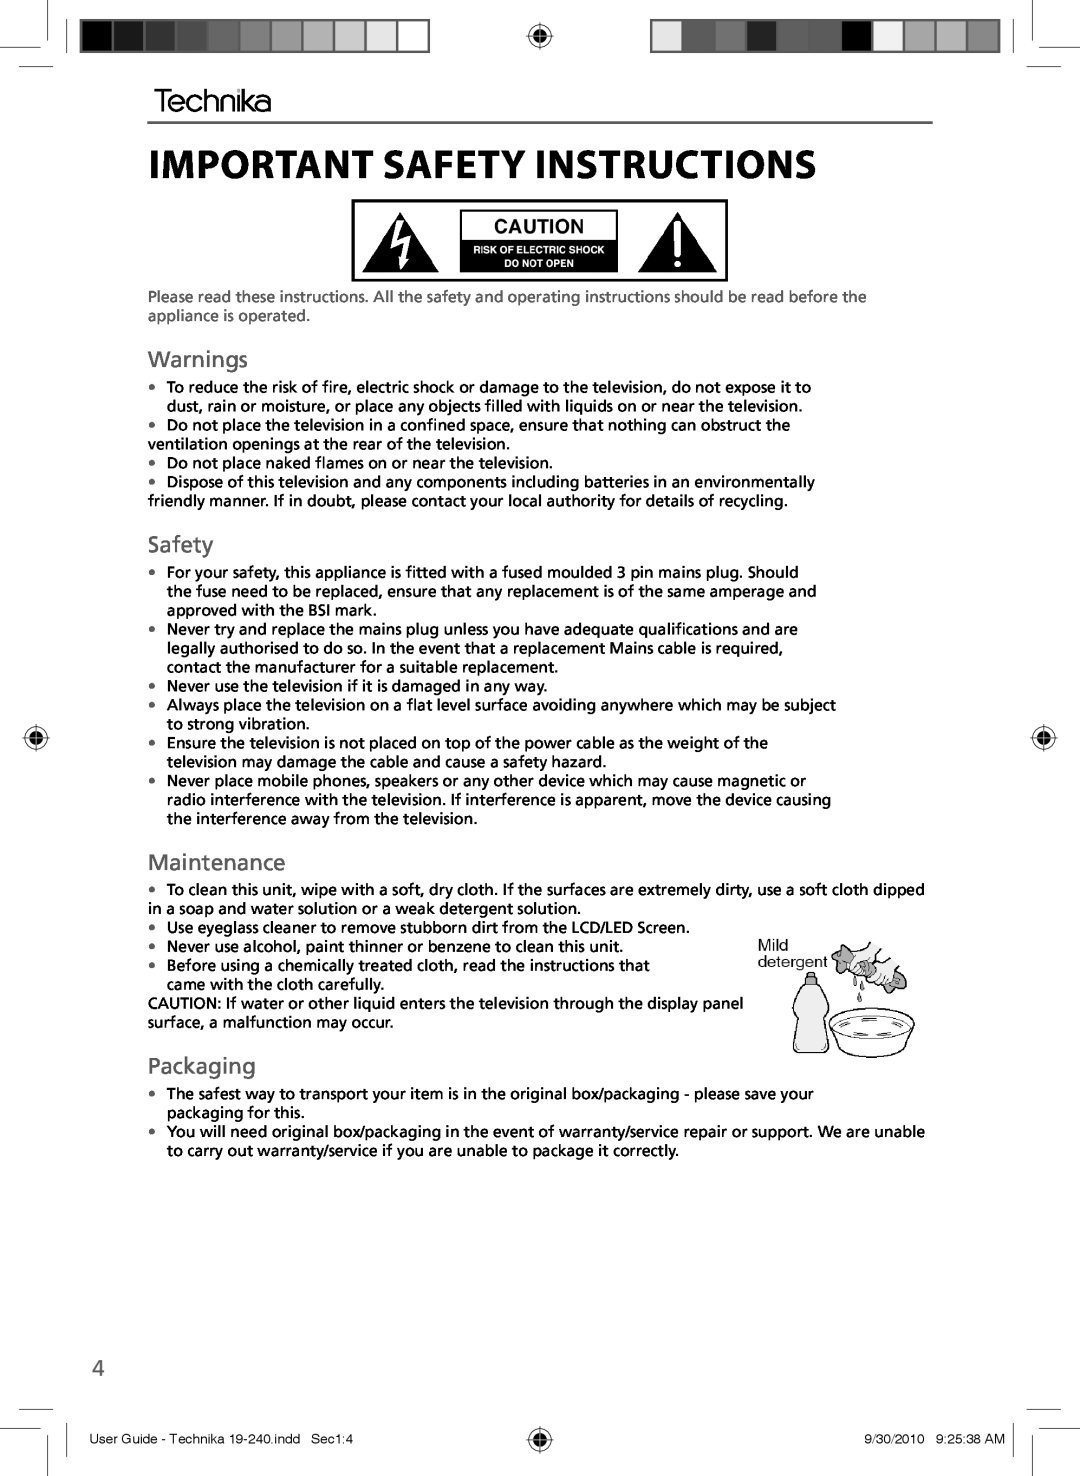 Technika LCD 19-240 manual Important Safety Instructions, Warnings, Maintenance, Packaging 